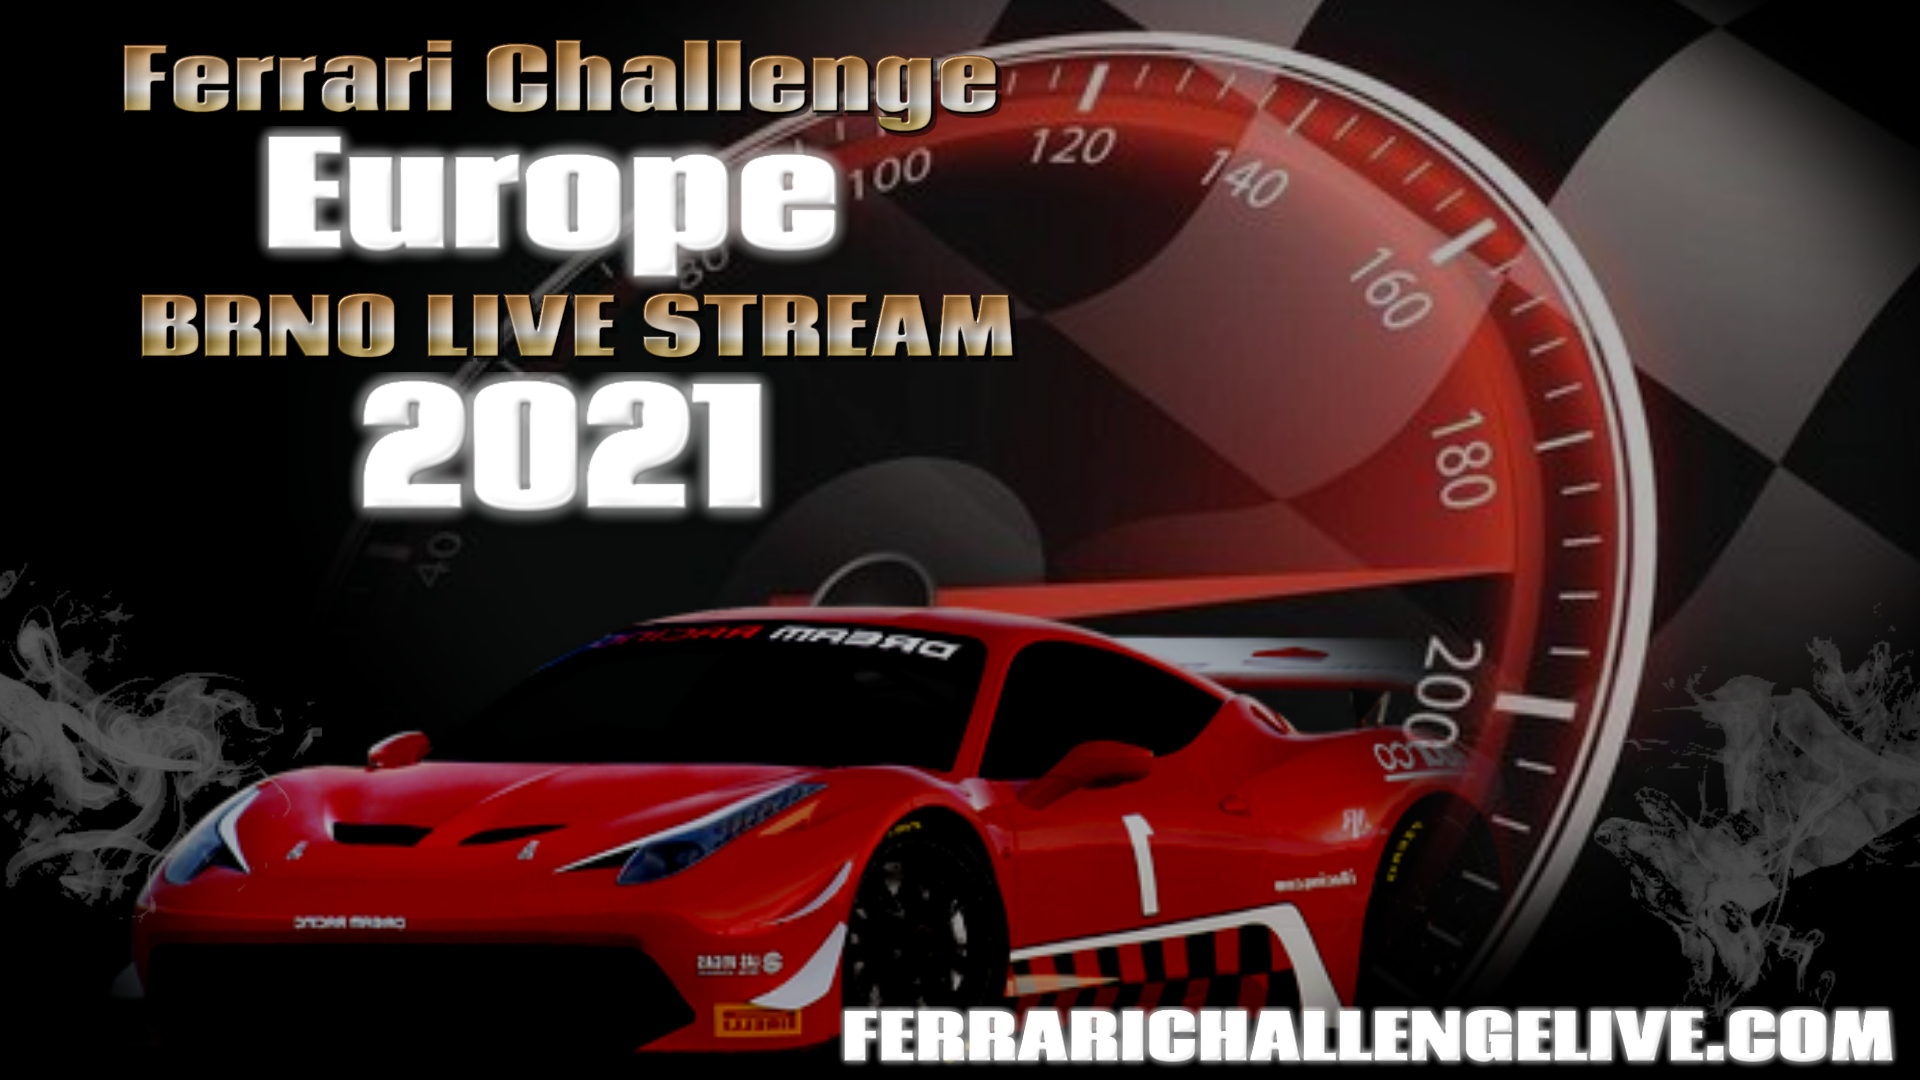 brno-ferrari-challenge-europe-live-stream